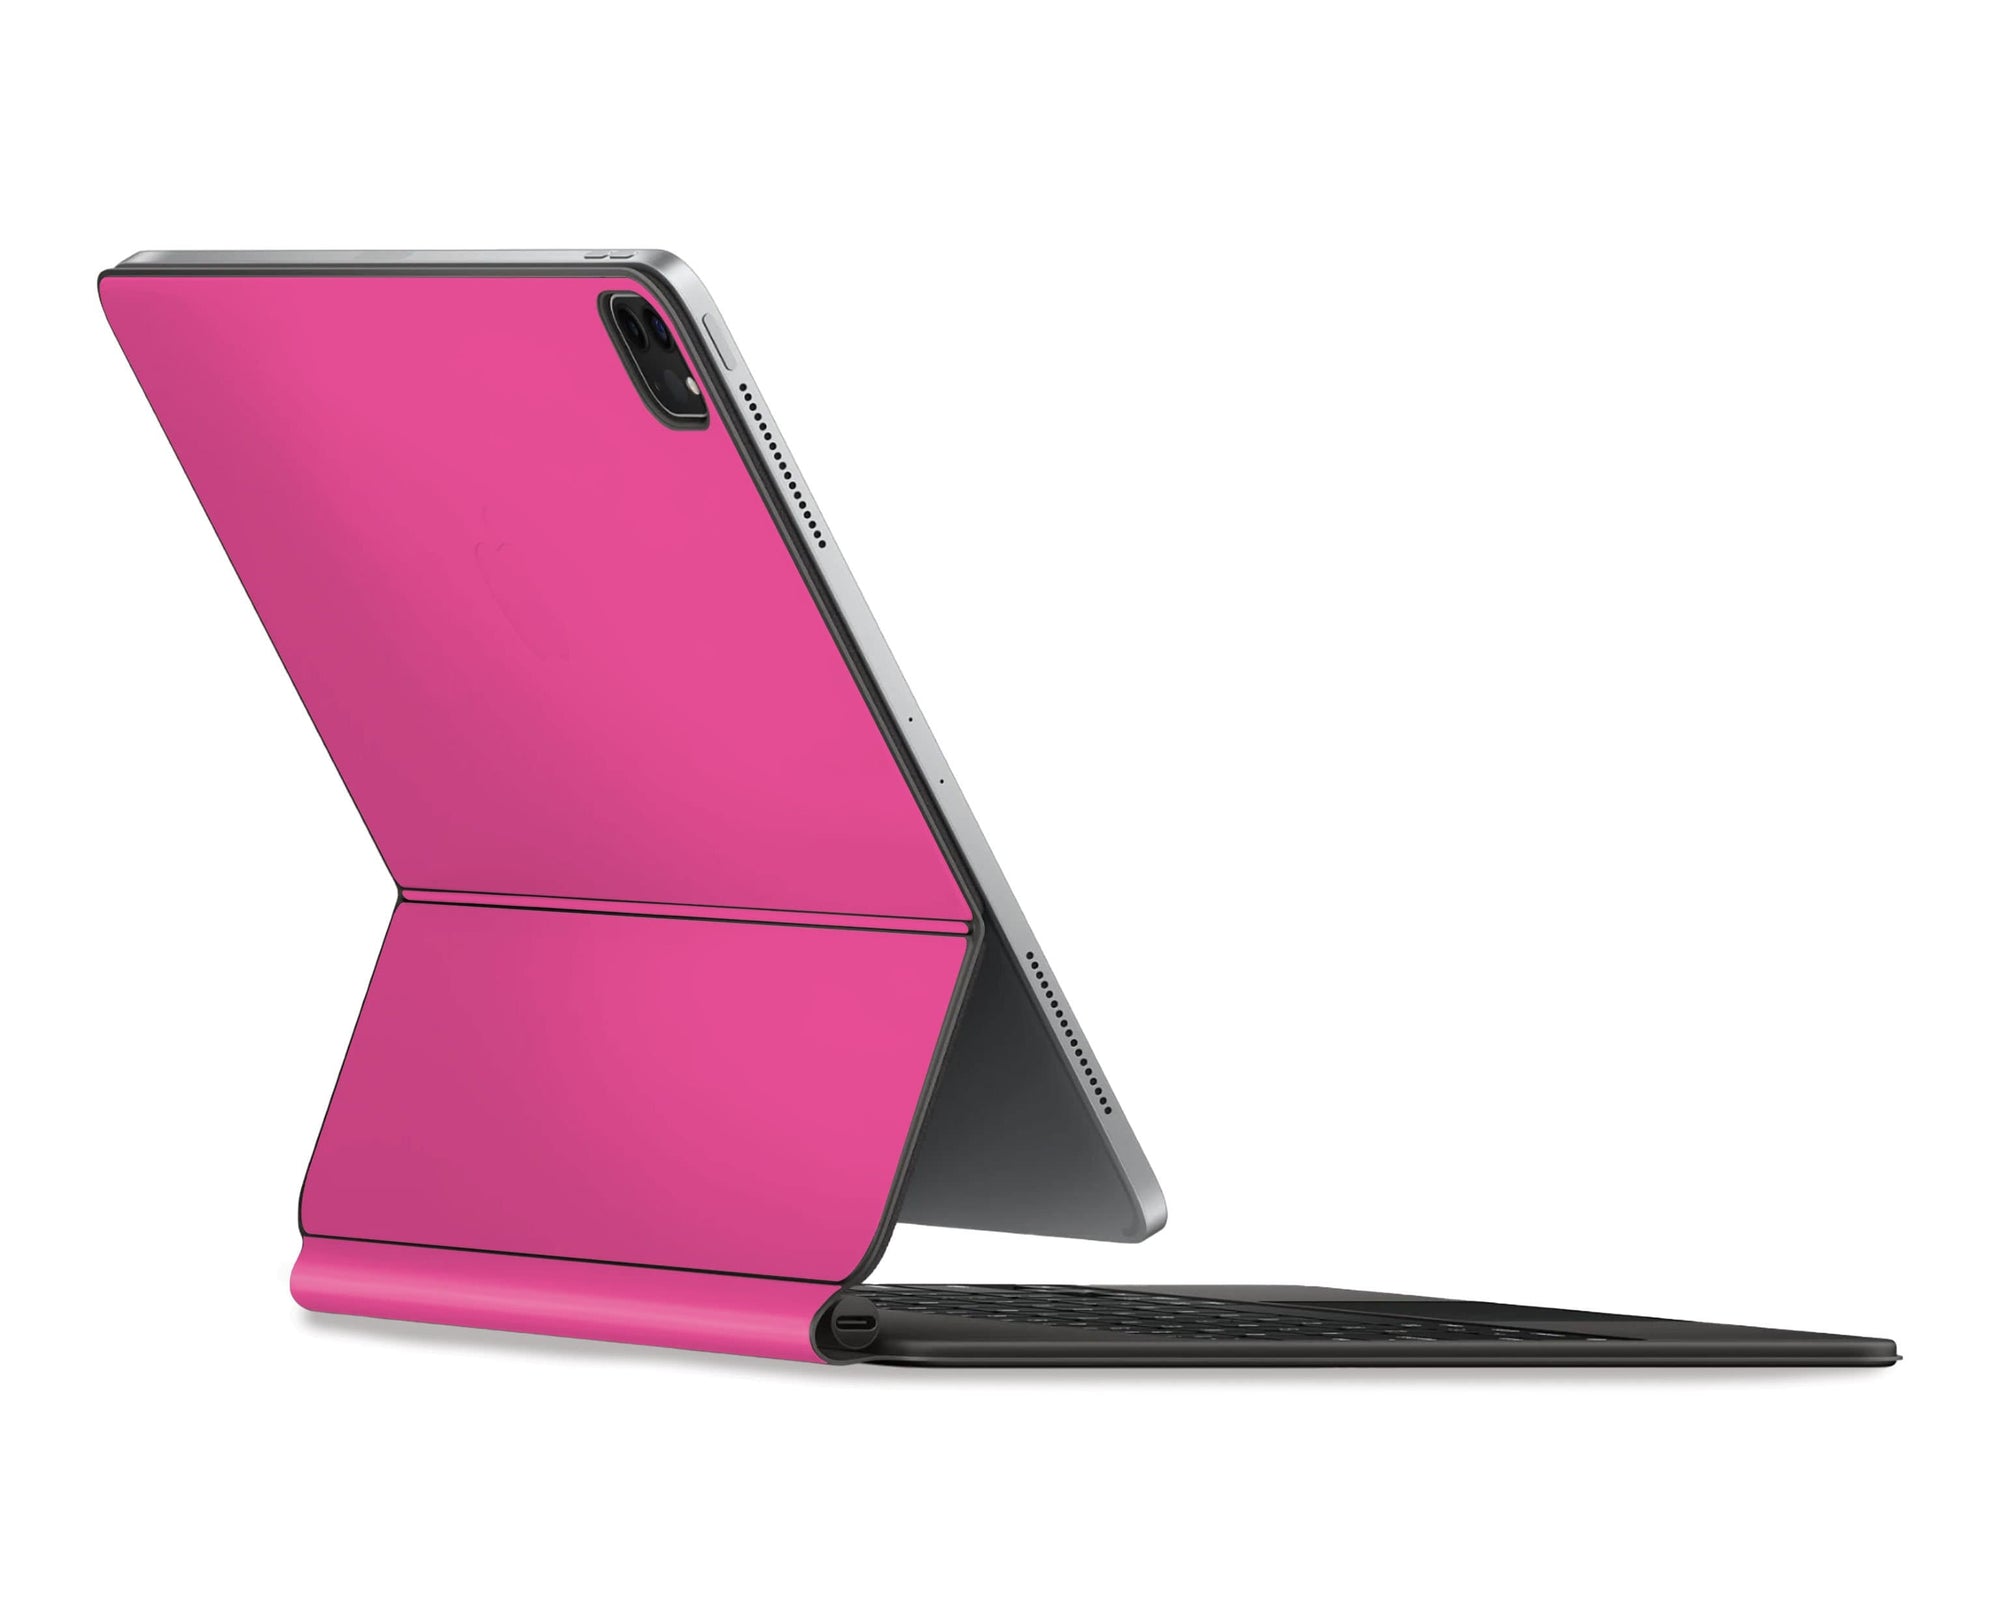 Pink Sakura Magic Keyboard Skin for iPad Pro 11 and Air 4